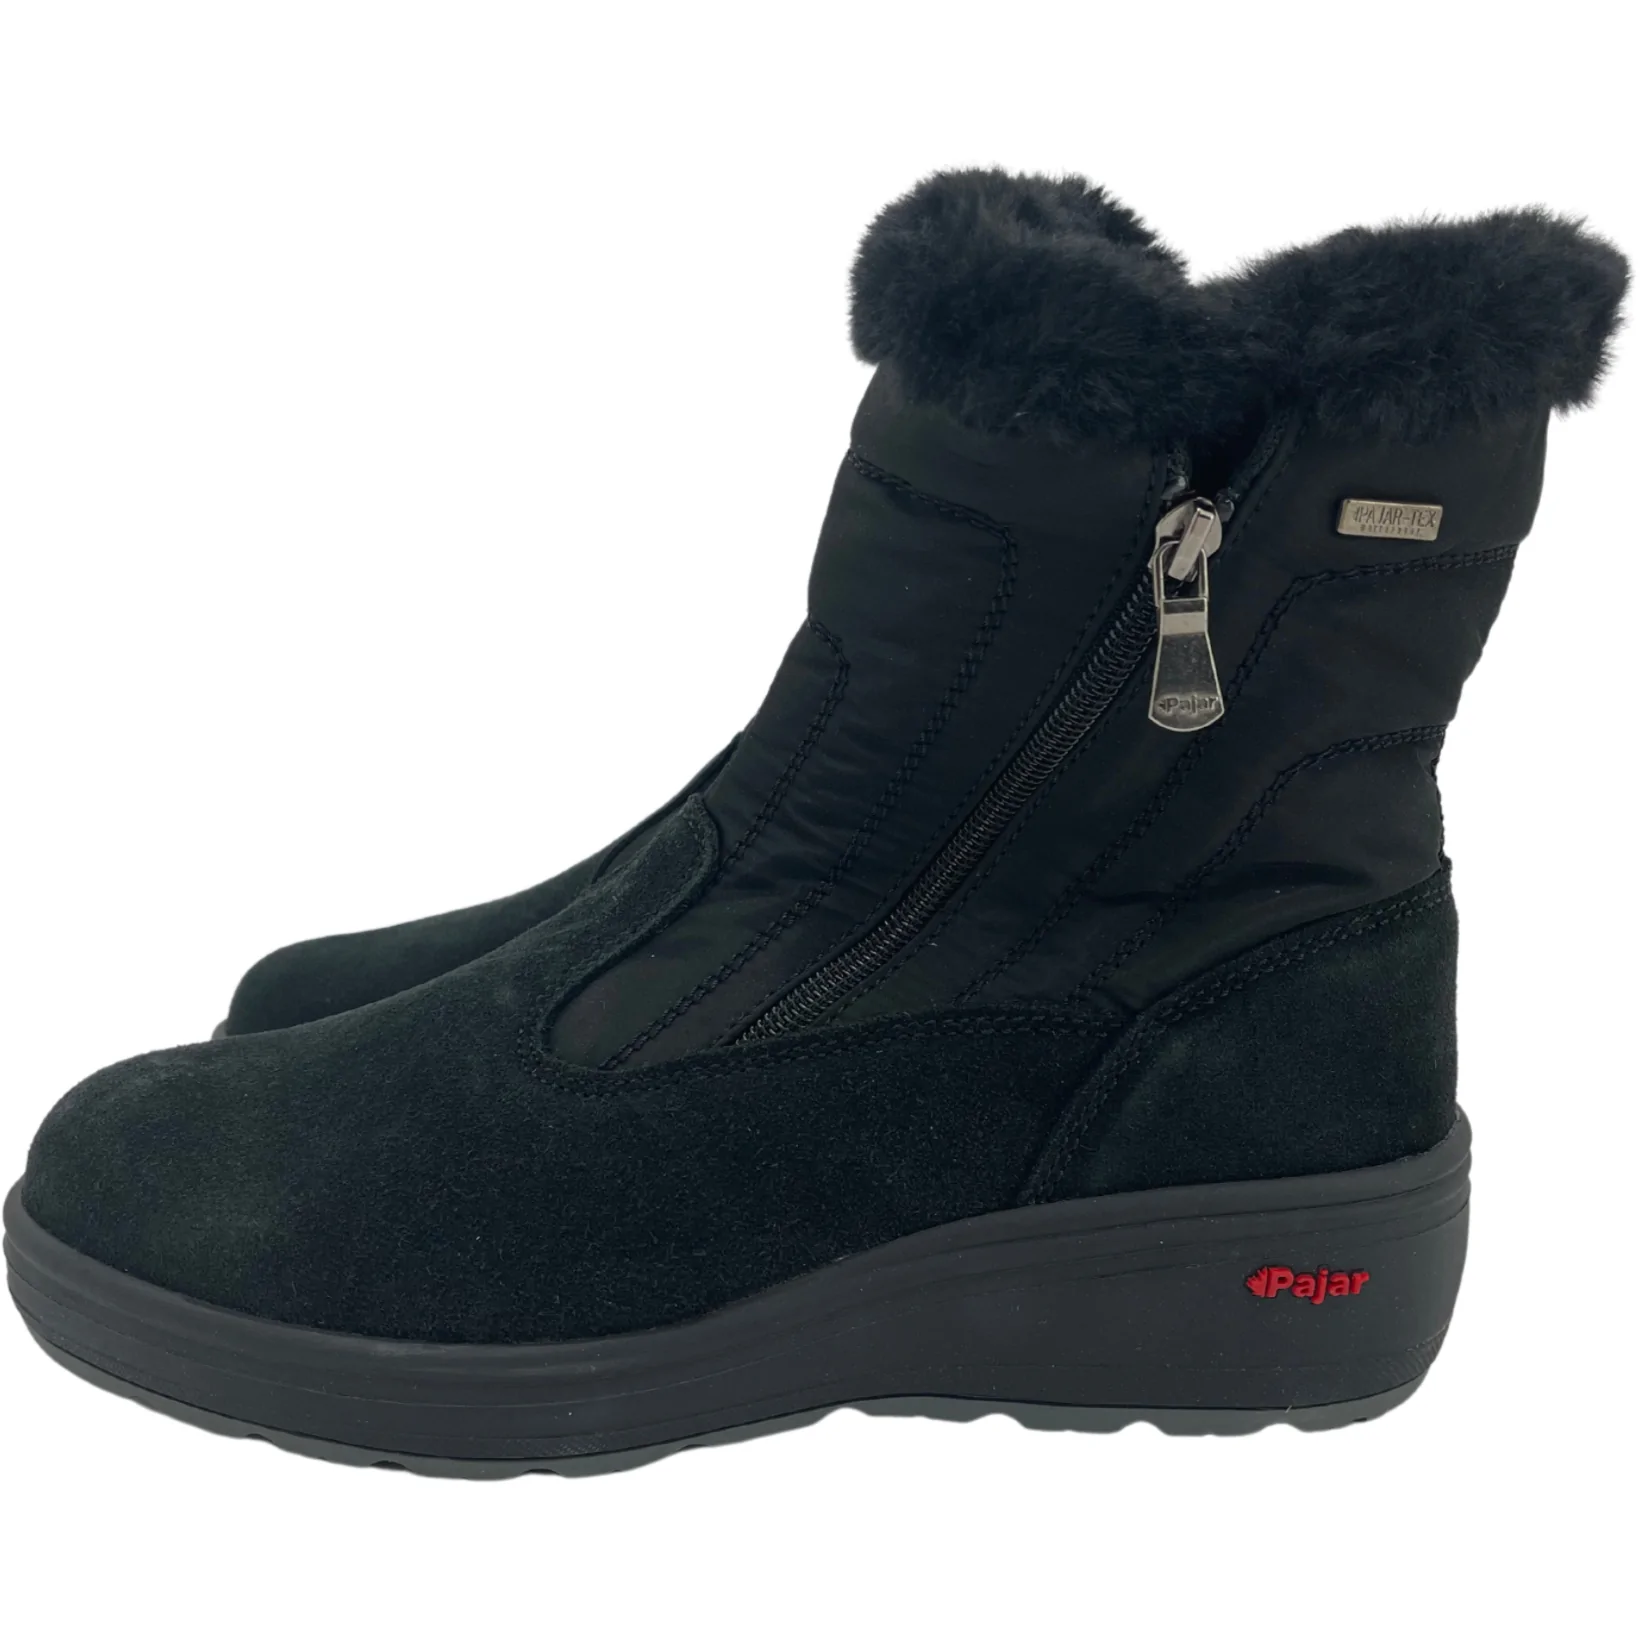 Pajar Women's Ice Gripper Winter Boots / Black / EUR 41